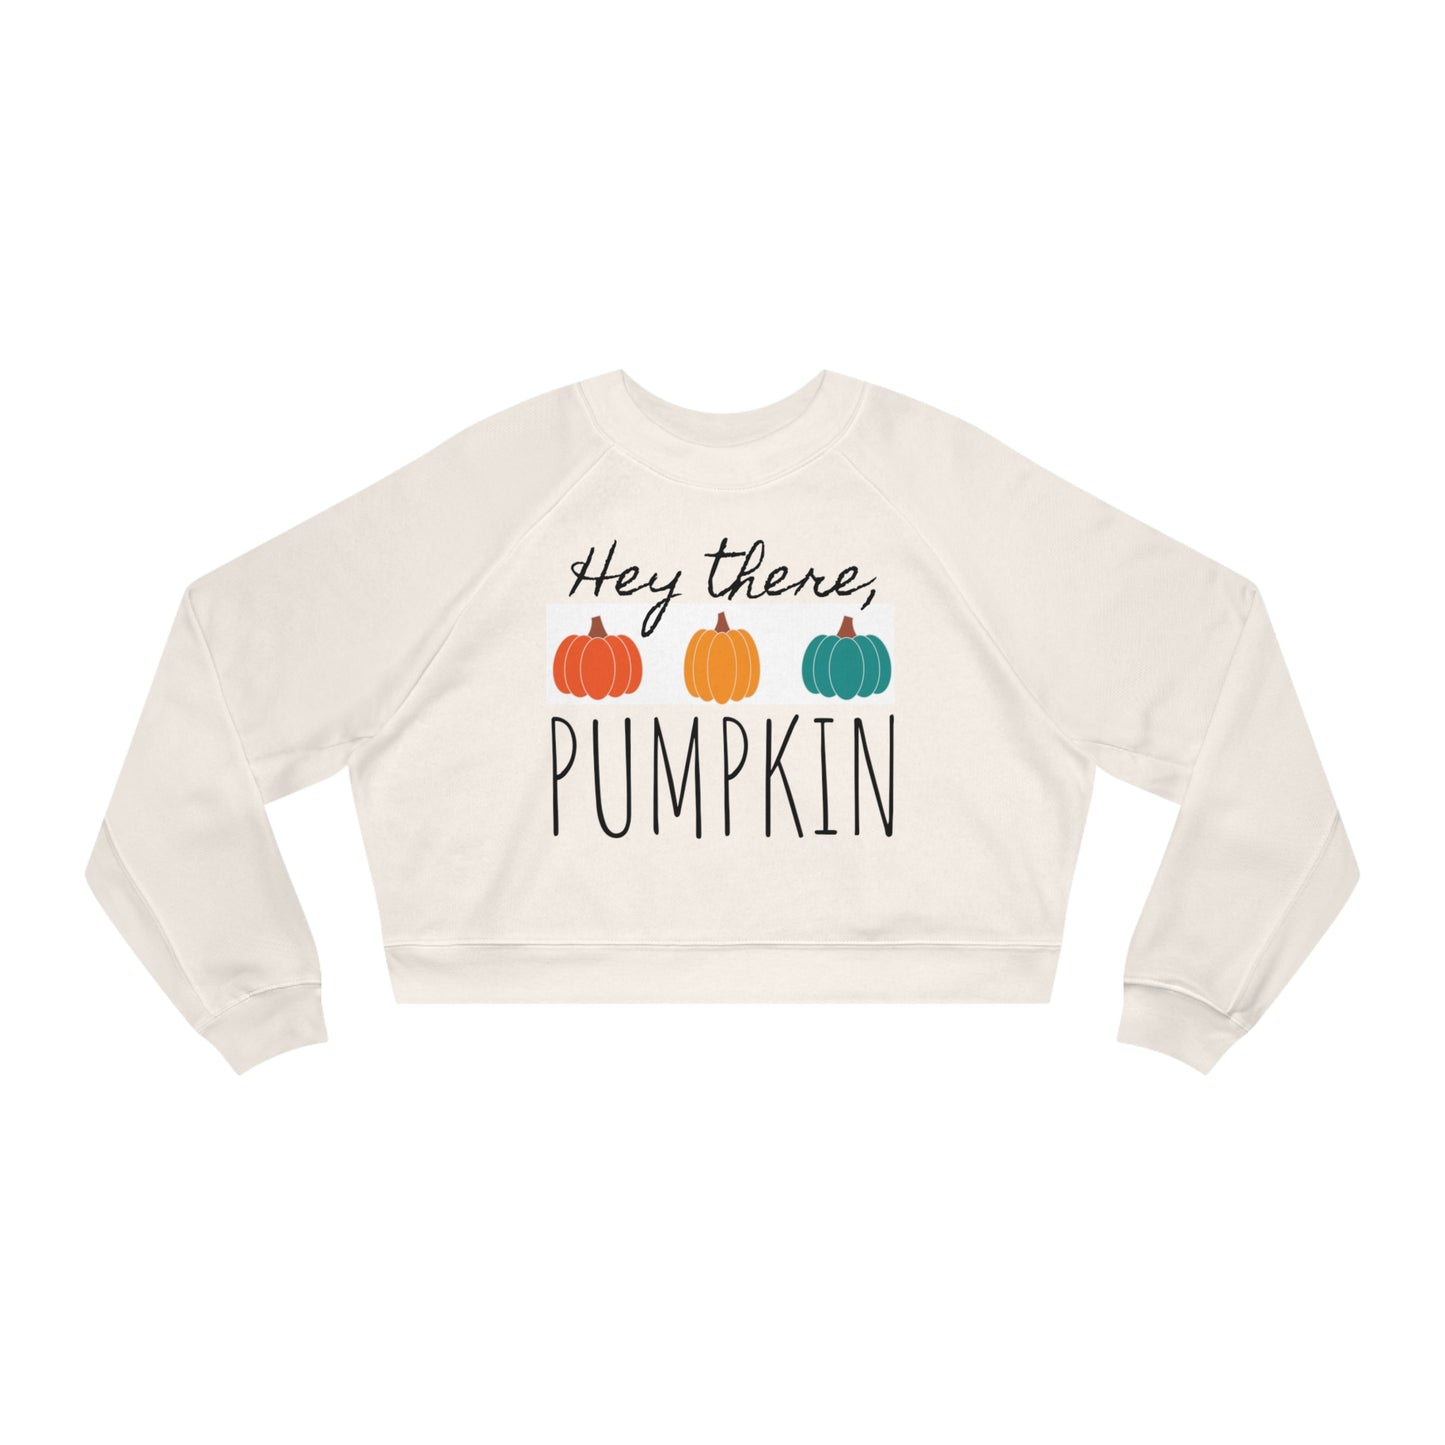 Hey there, Pumpkin // Women's Cropped Fleece Pullover